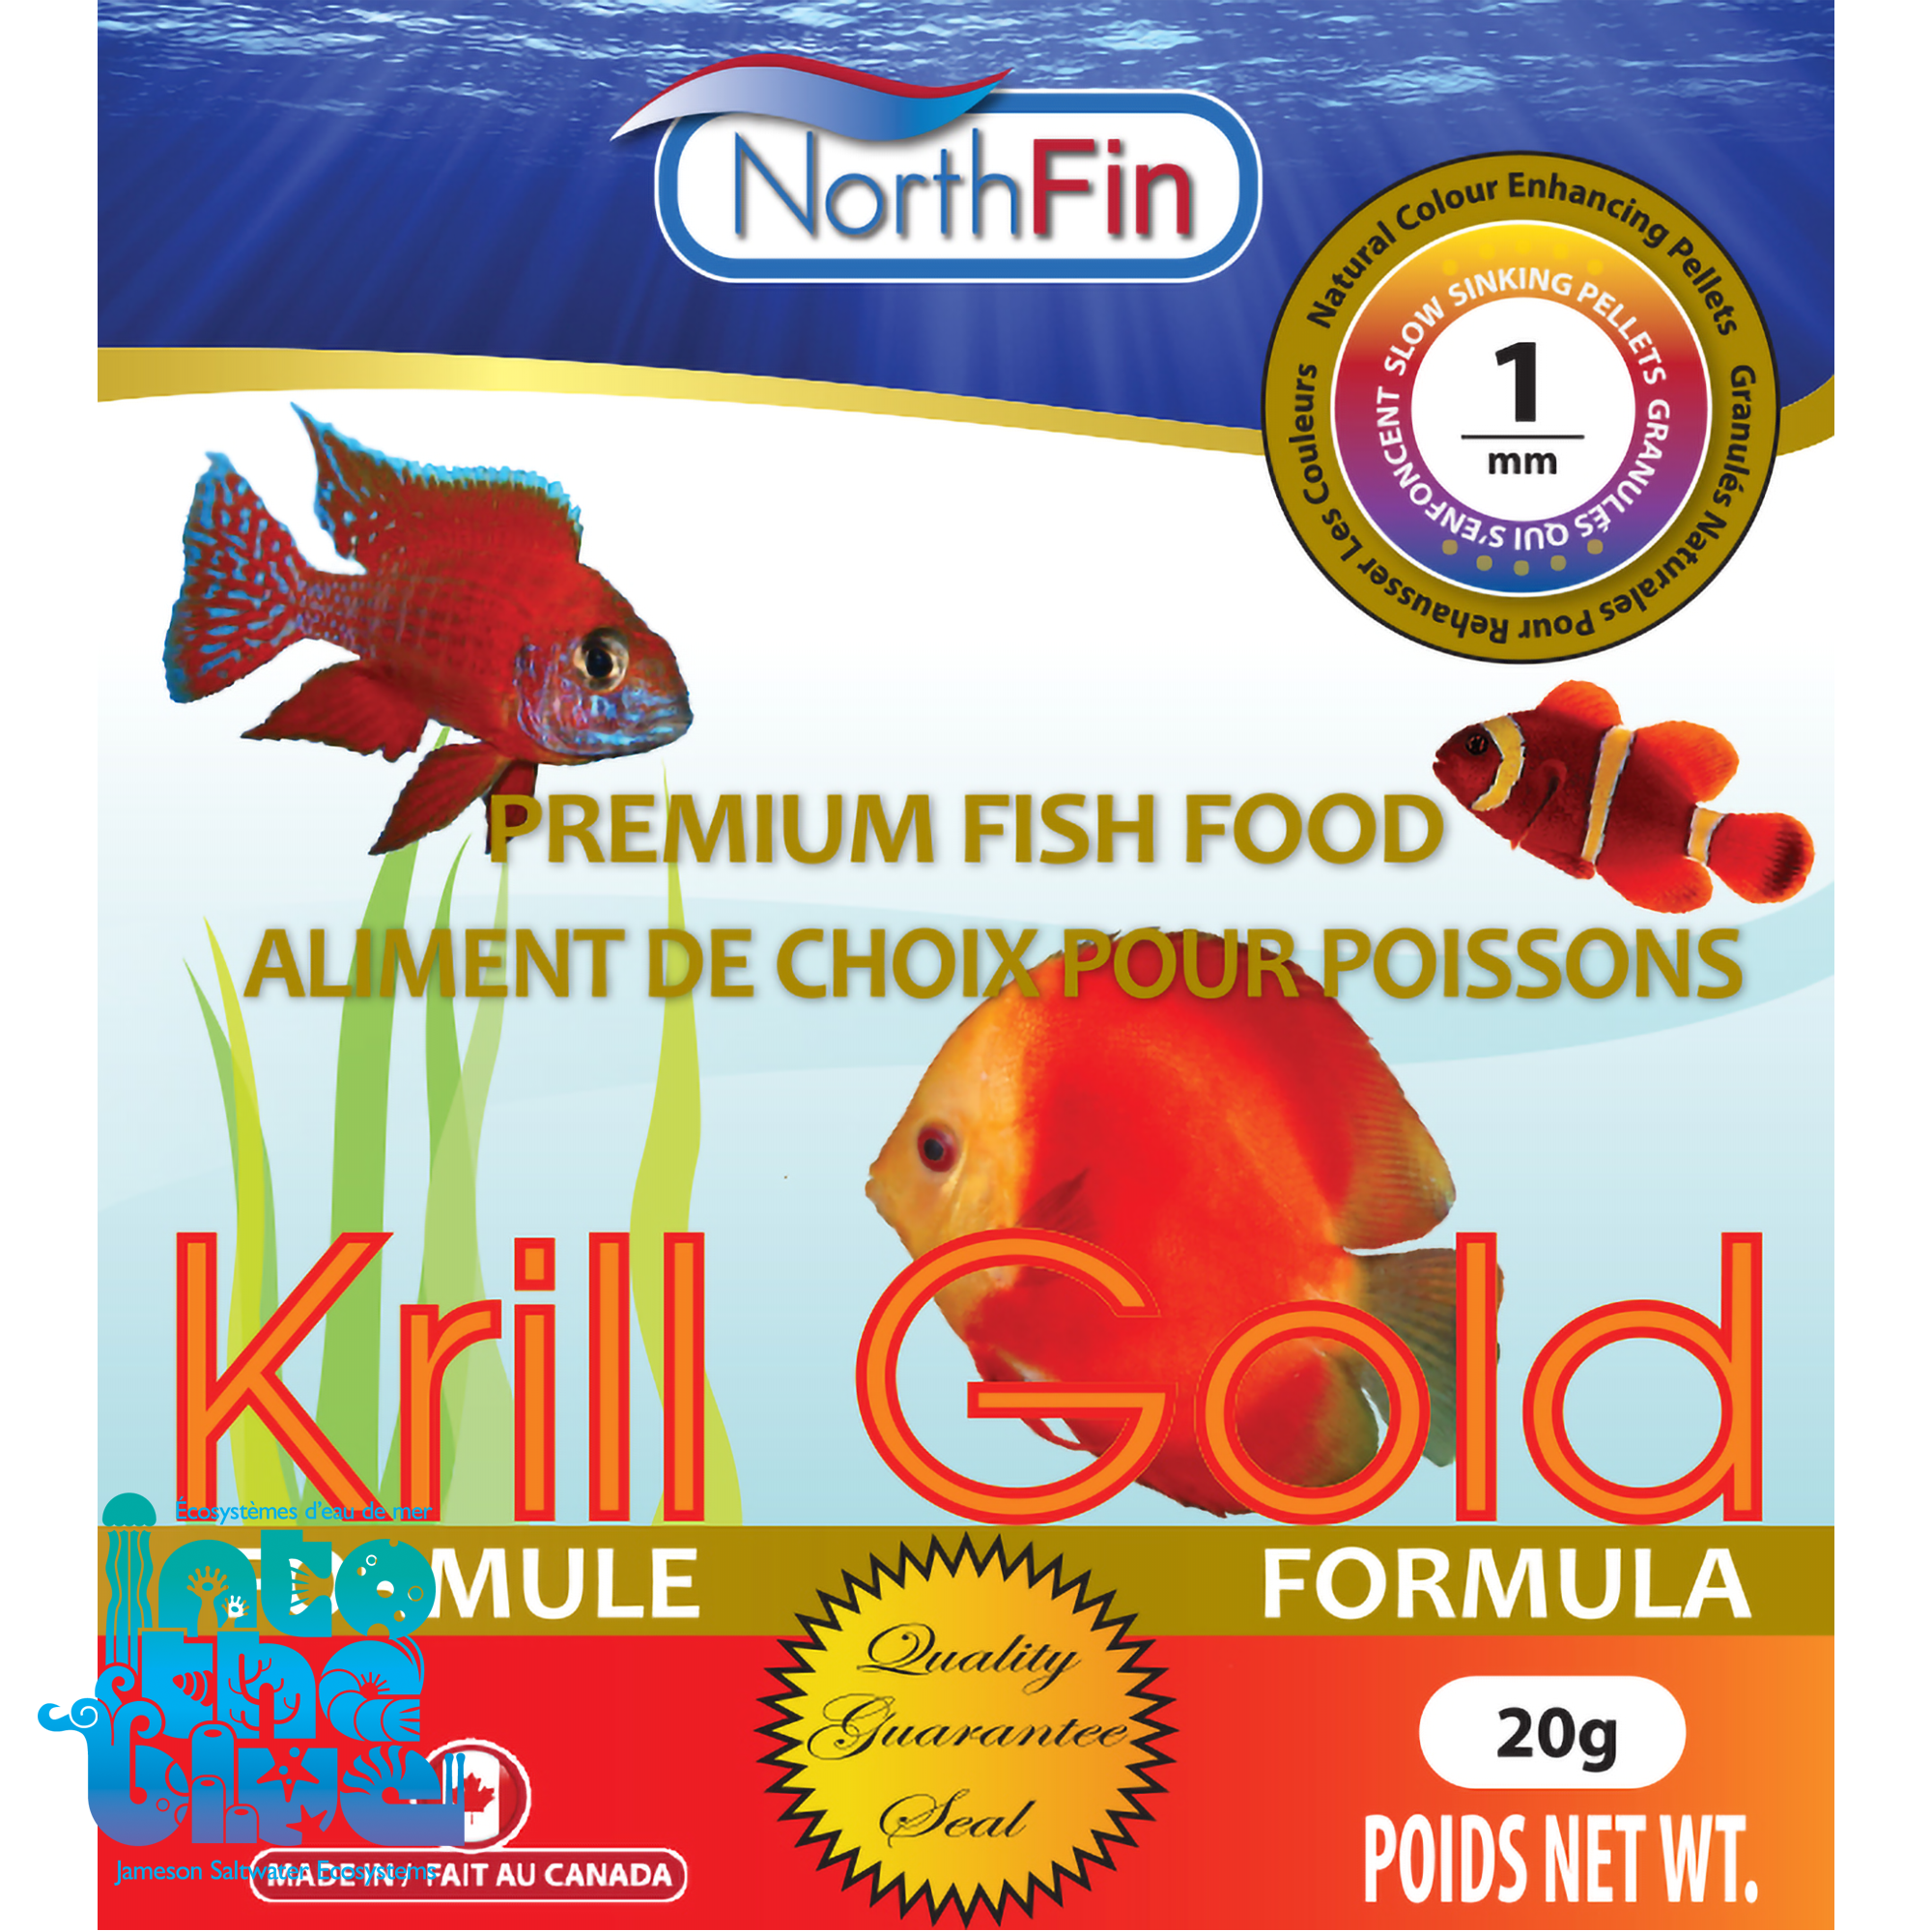 Northfin Krill Gold